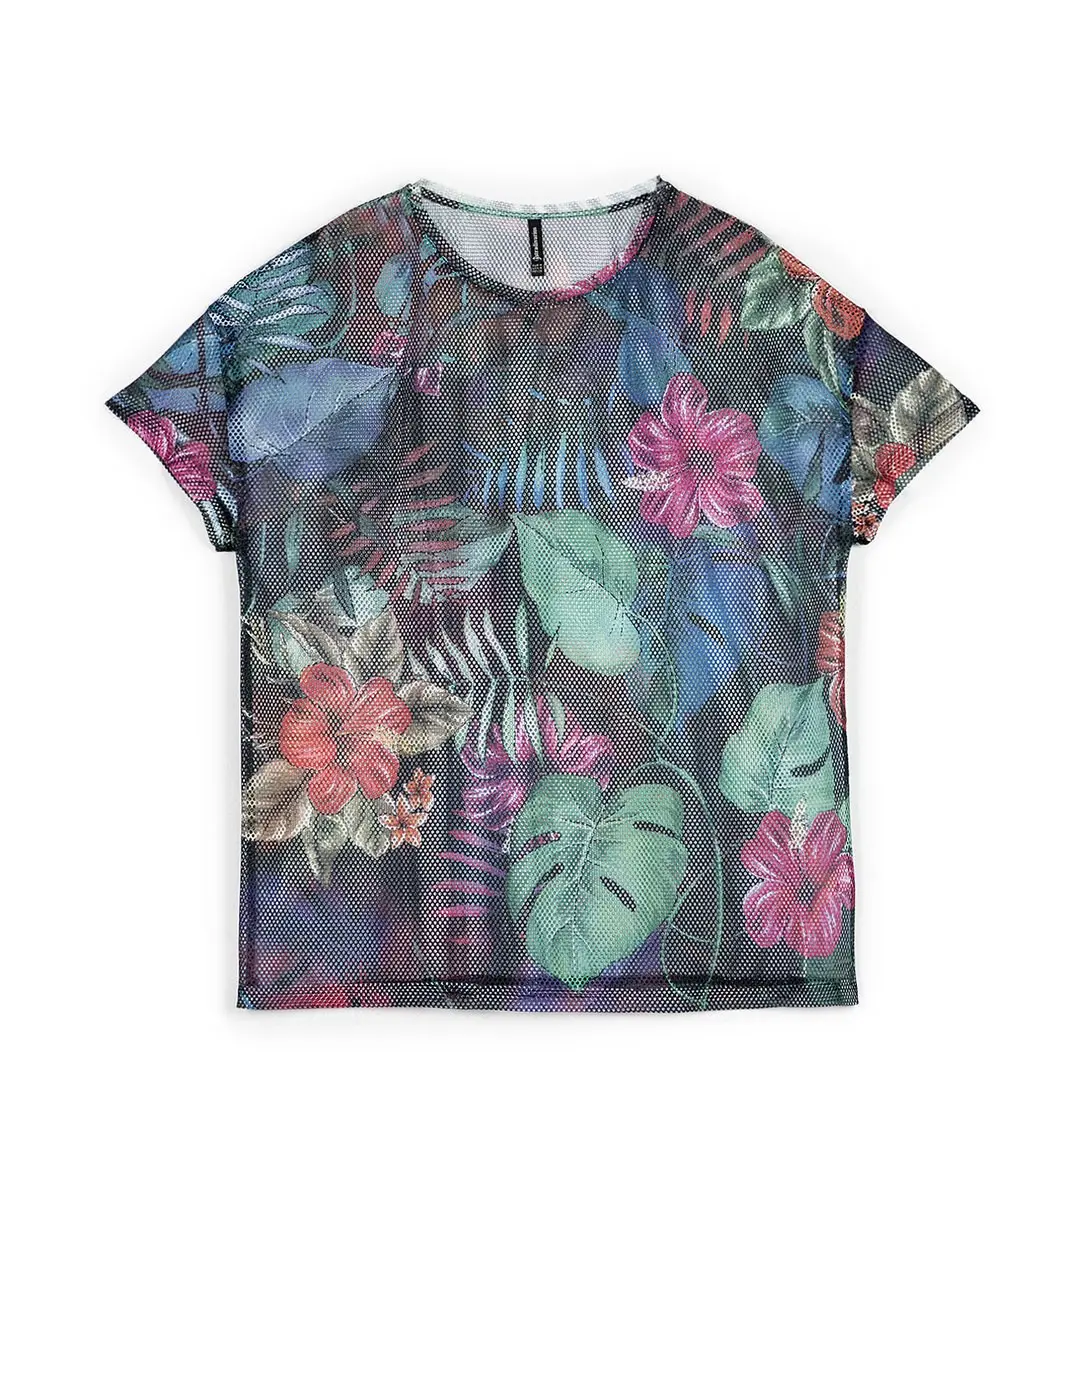 Floral print T-shirt, Rp 99.900. (stradivarius.com)